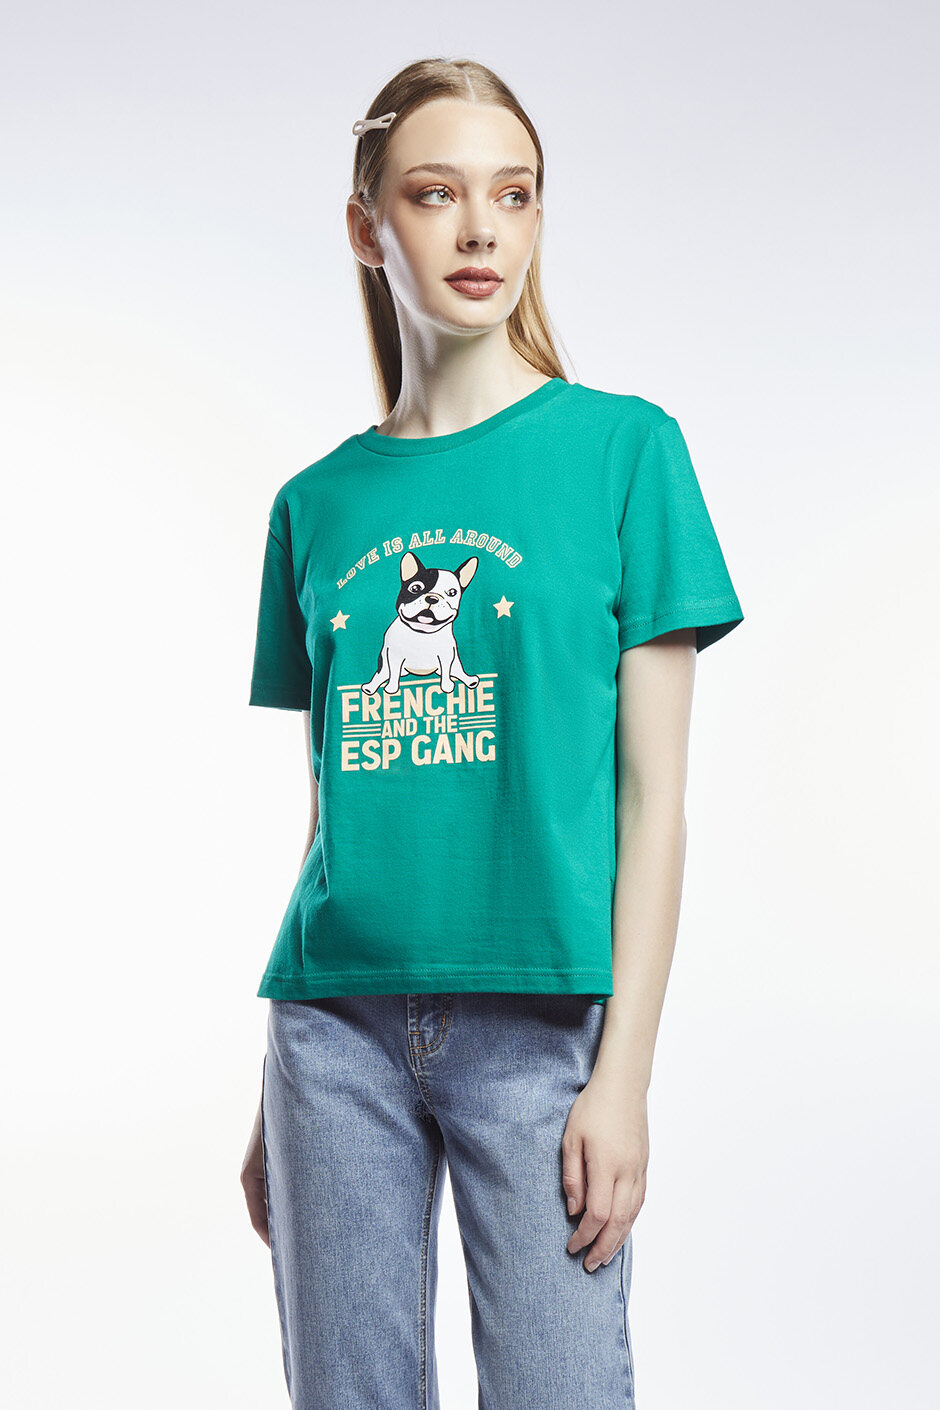 ESP เสื้อทีเชิ้ตลายเฟรนช์ชี่ ผู้หญิง สีเขียว | Frenchie Tee Shirt | 6059 ไซส์ Int S ไซส์ Int S